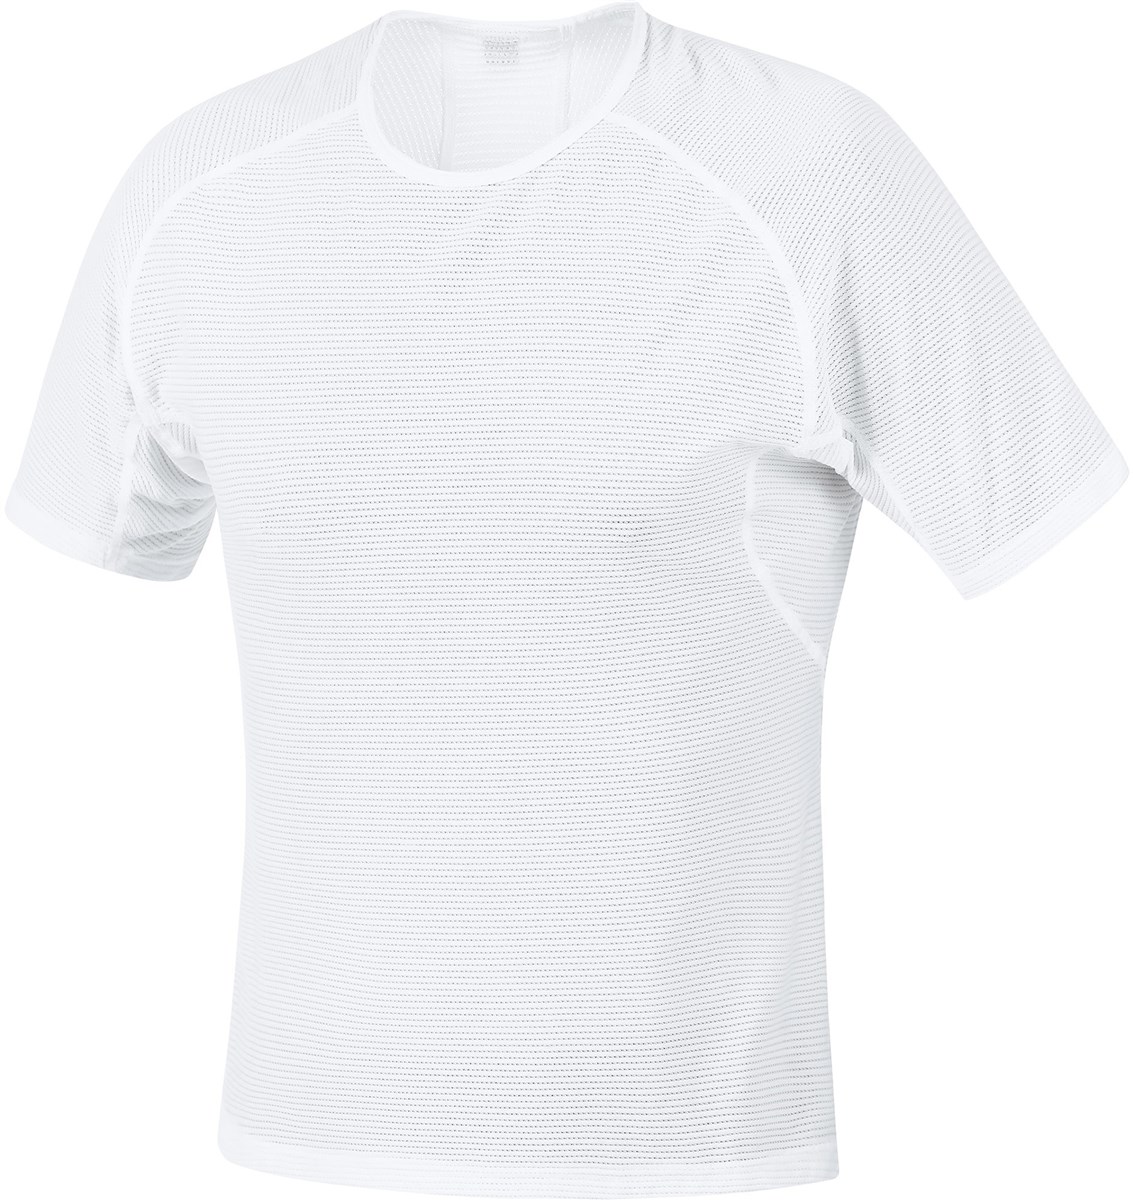 Gore Base Layer Shirt AW17 product image